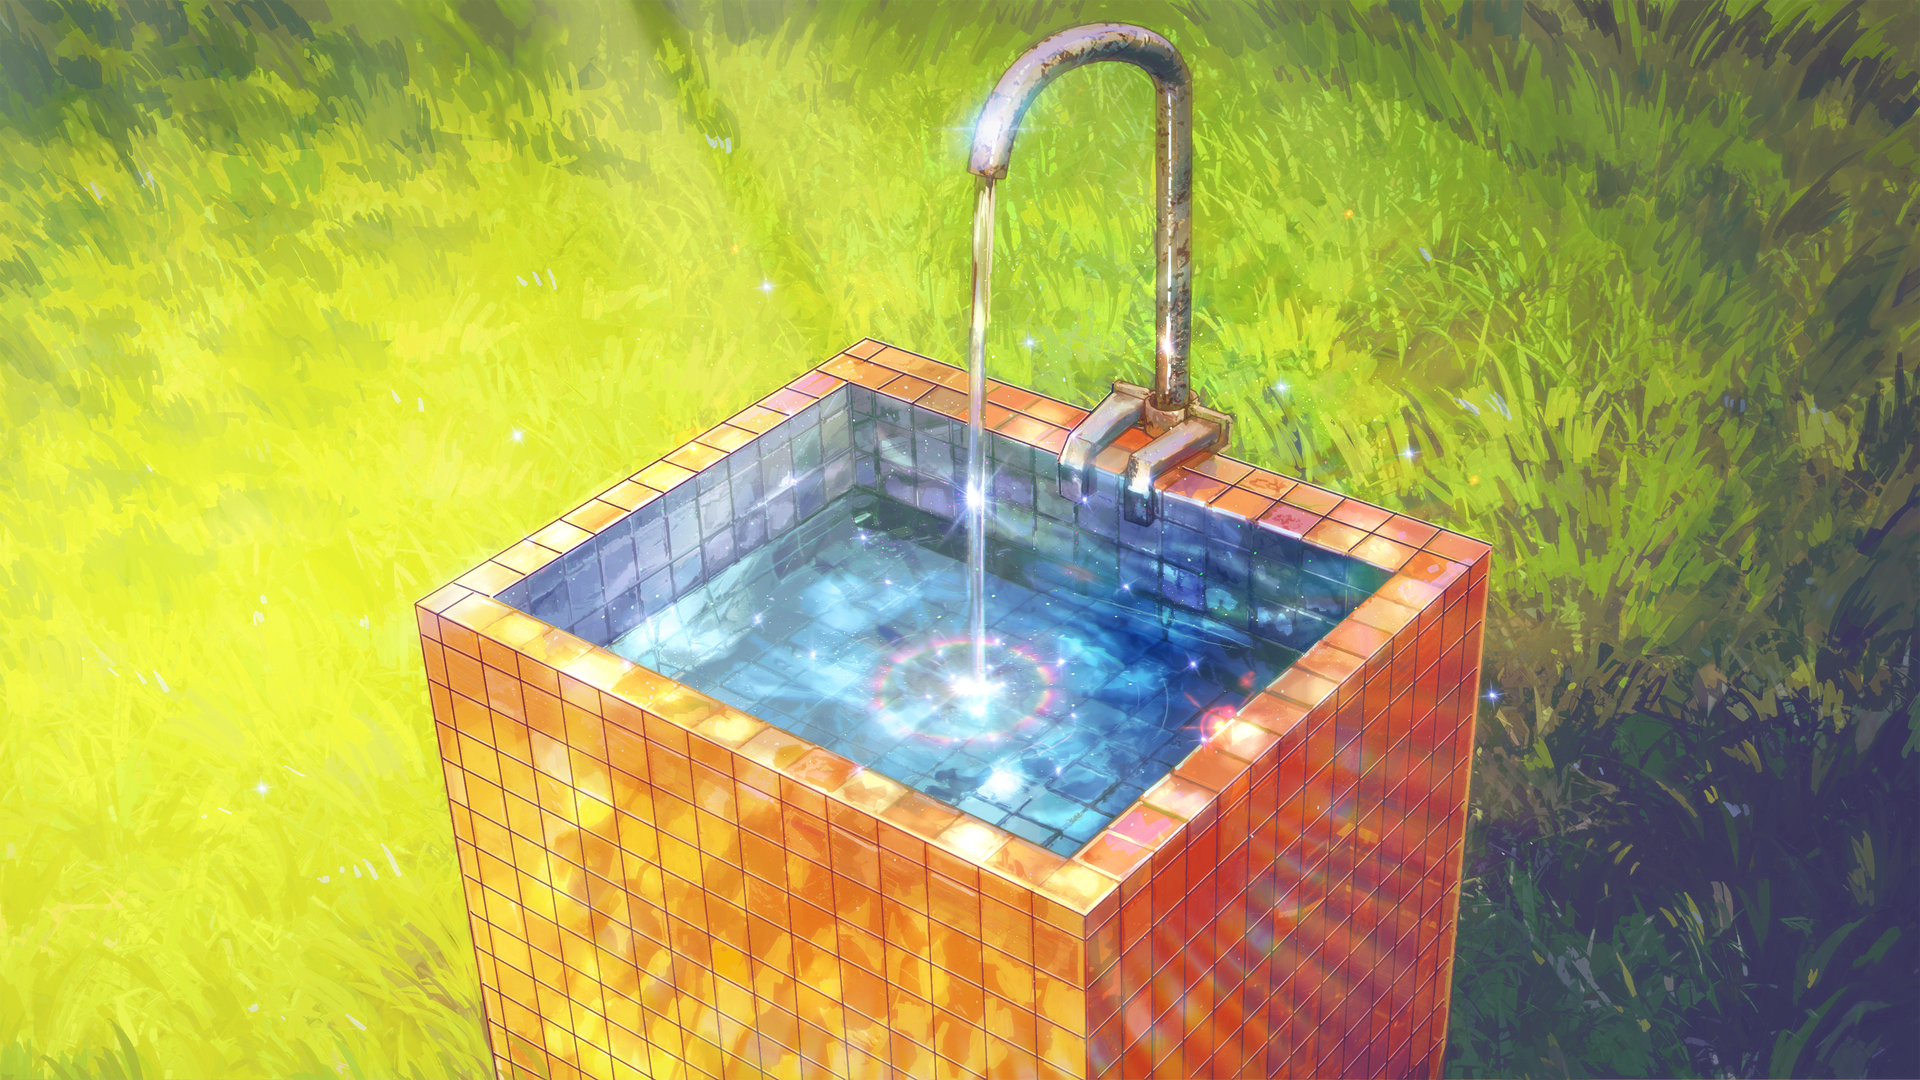 Everlasting Summer Drinking Fountains Rainbows Green Tiles Water ArseniXC 1920x1080